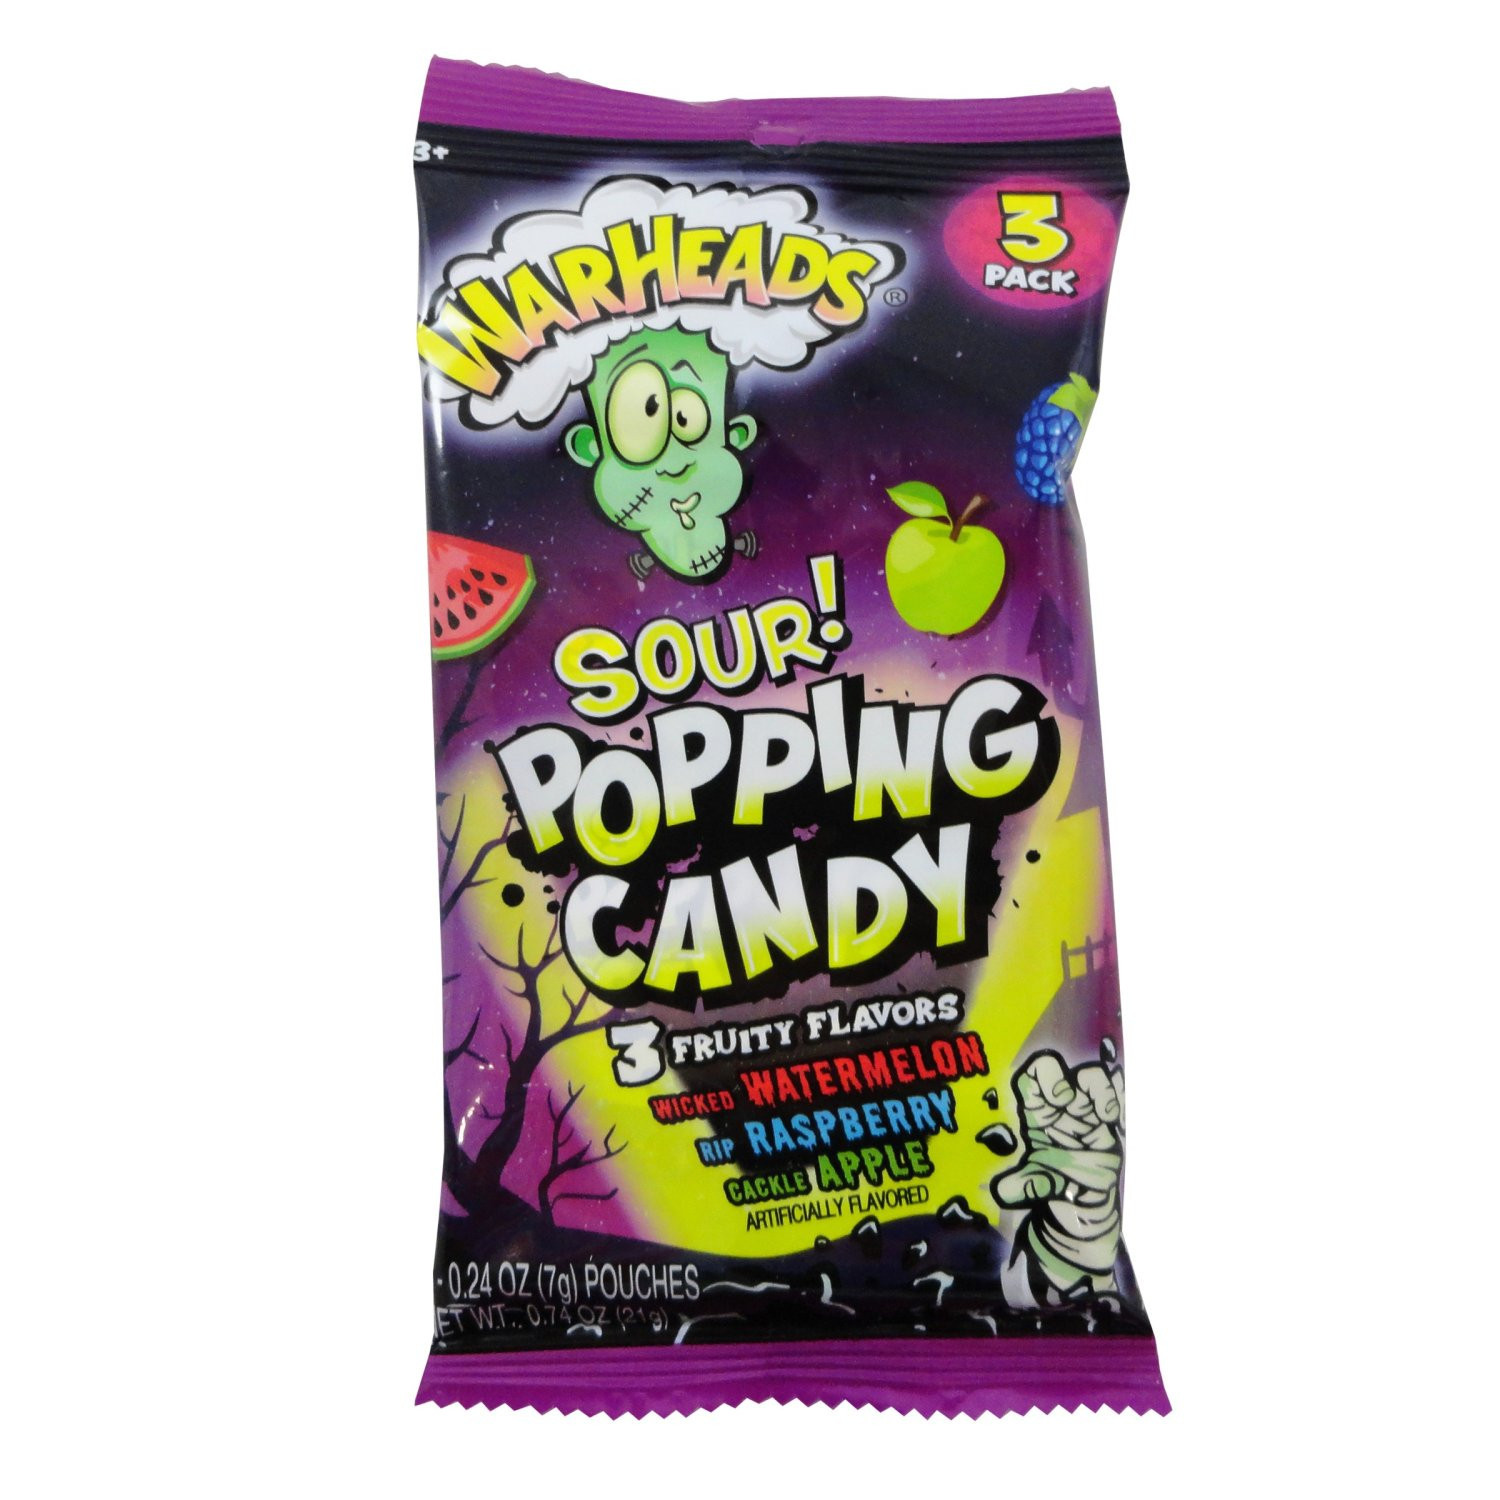 WarHeads WarHeads Halloween 3Pk. Popping Candy .74oz.